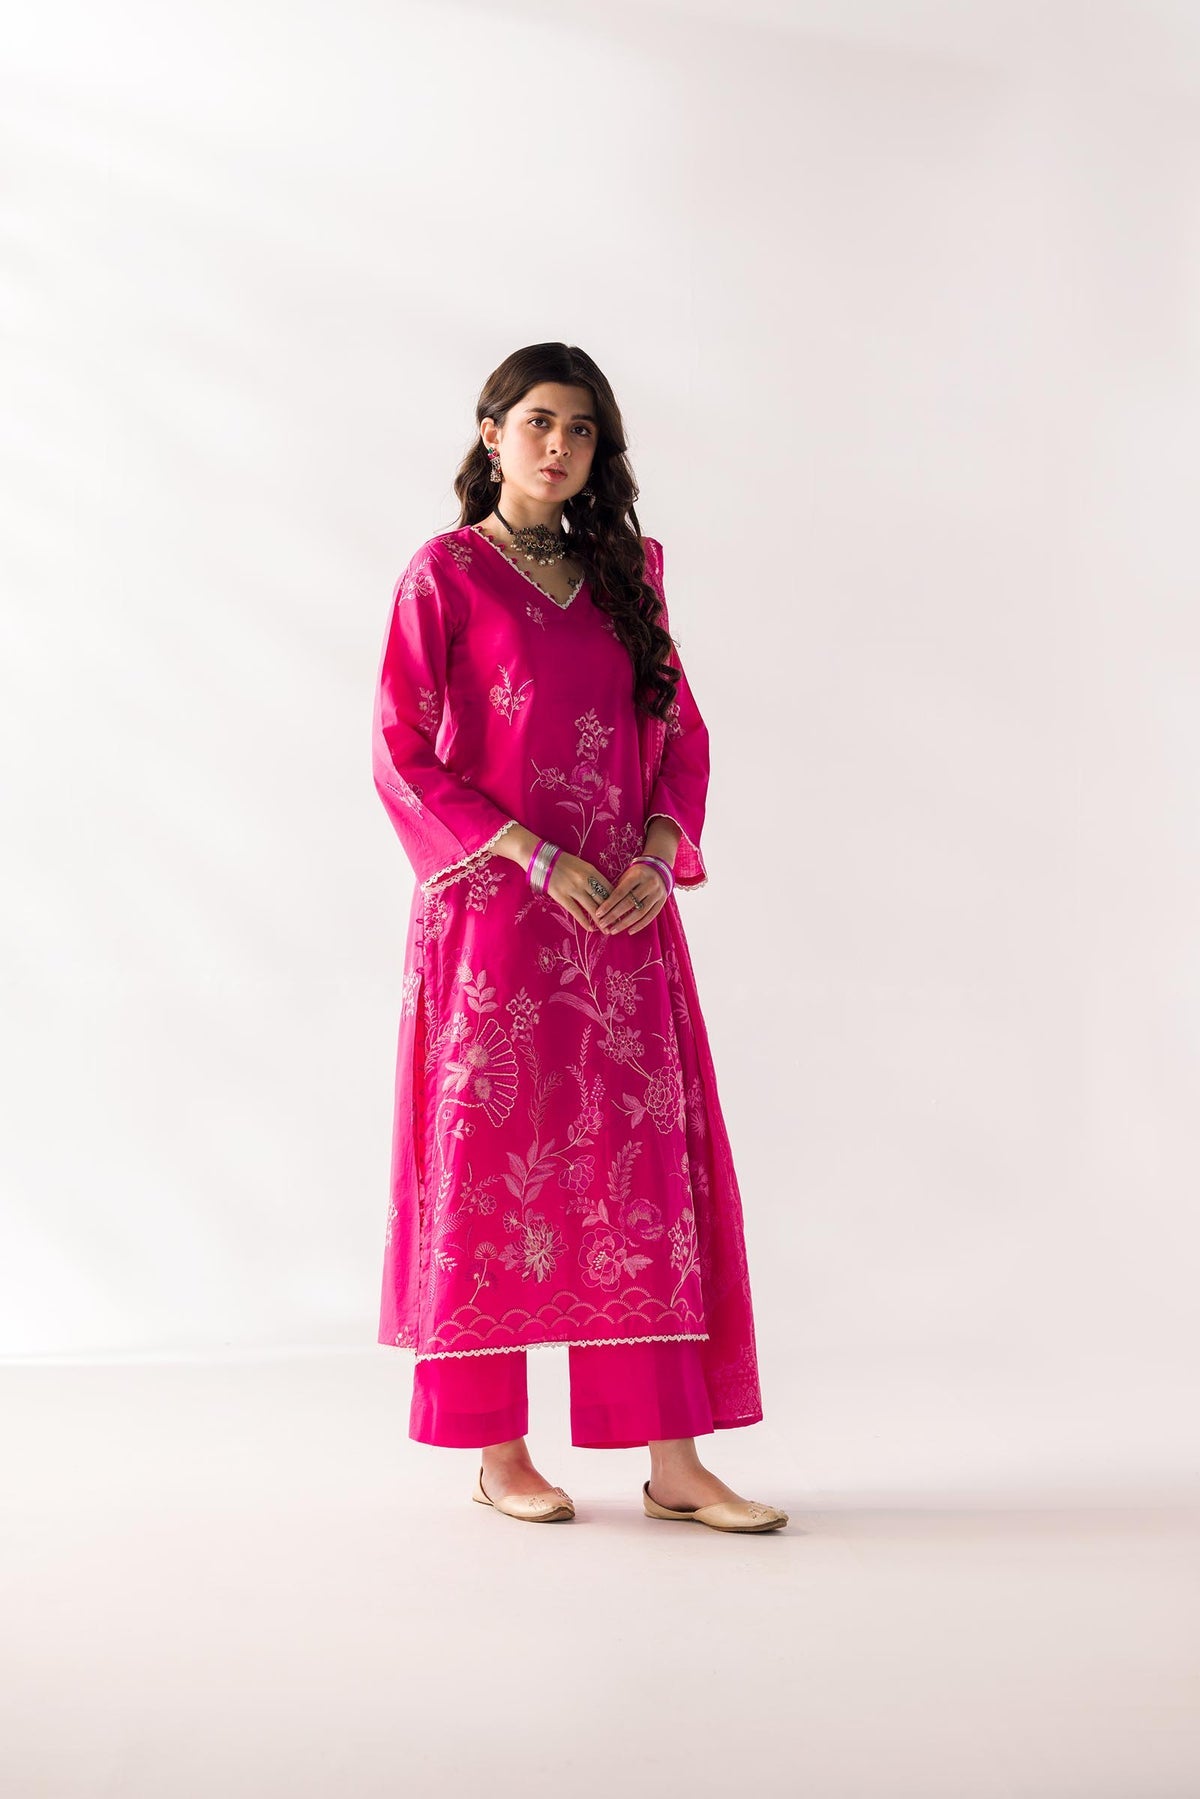 Taanabaana | Mem Saab Collection | M3240 - Khanumjan  Pakistani Clothes and Designer Dresses in UK, USA 